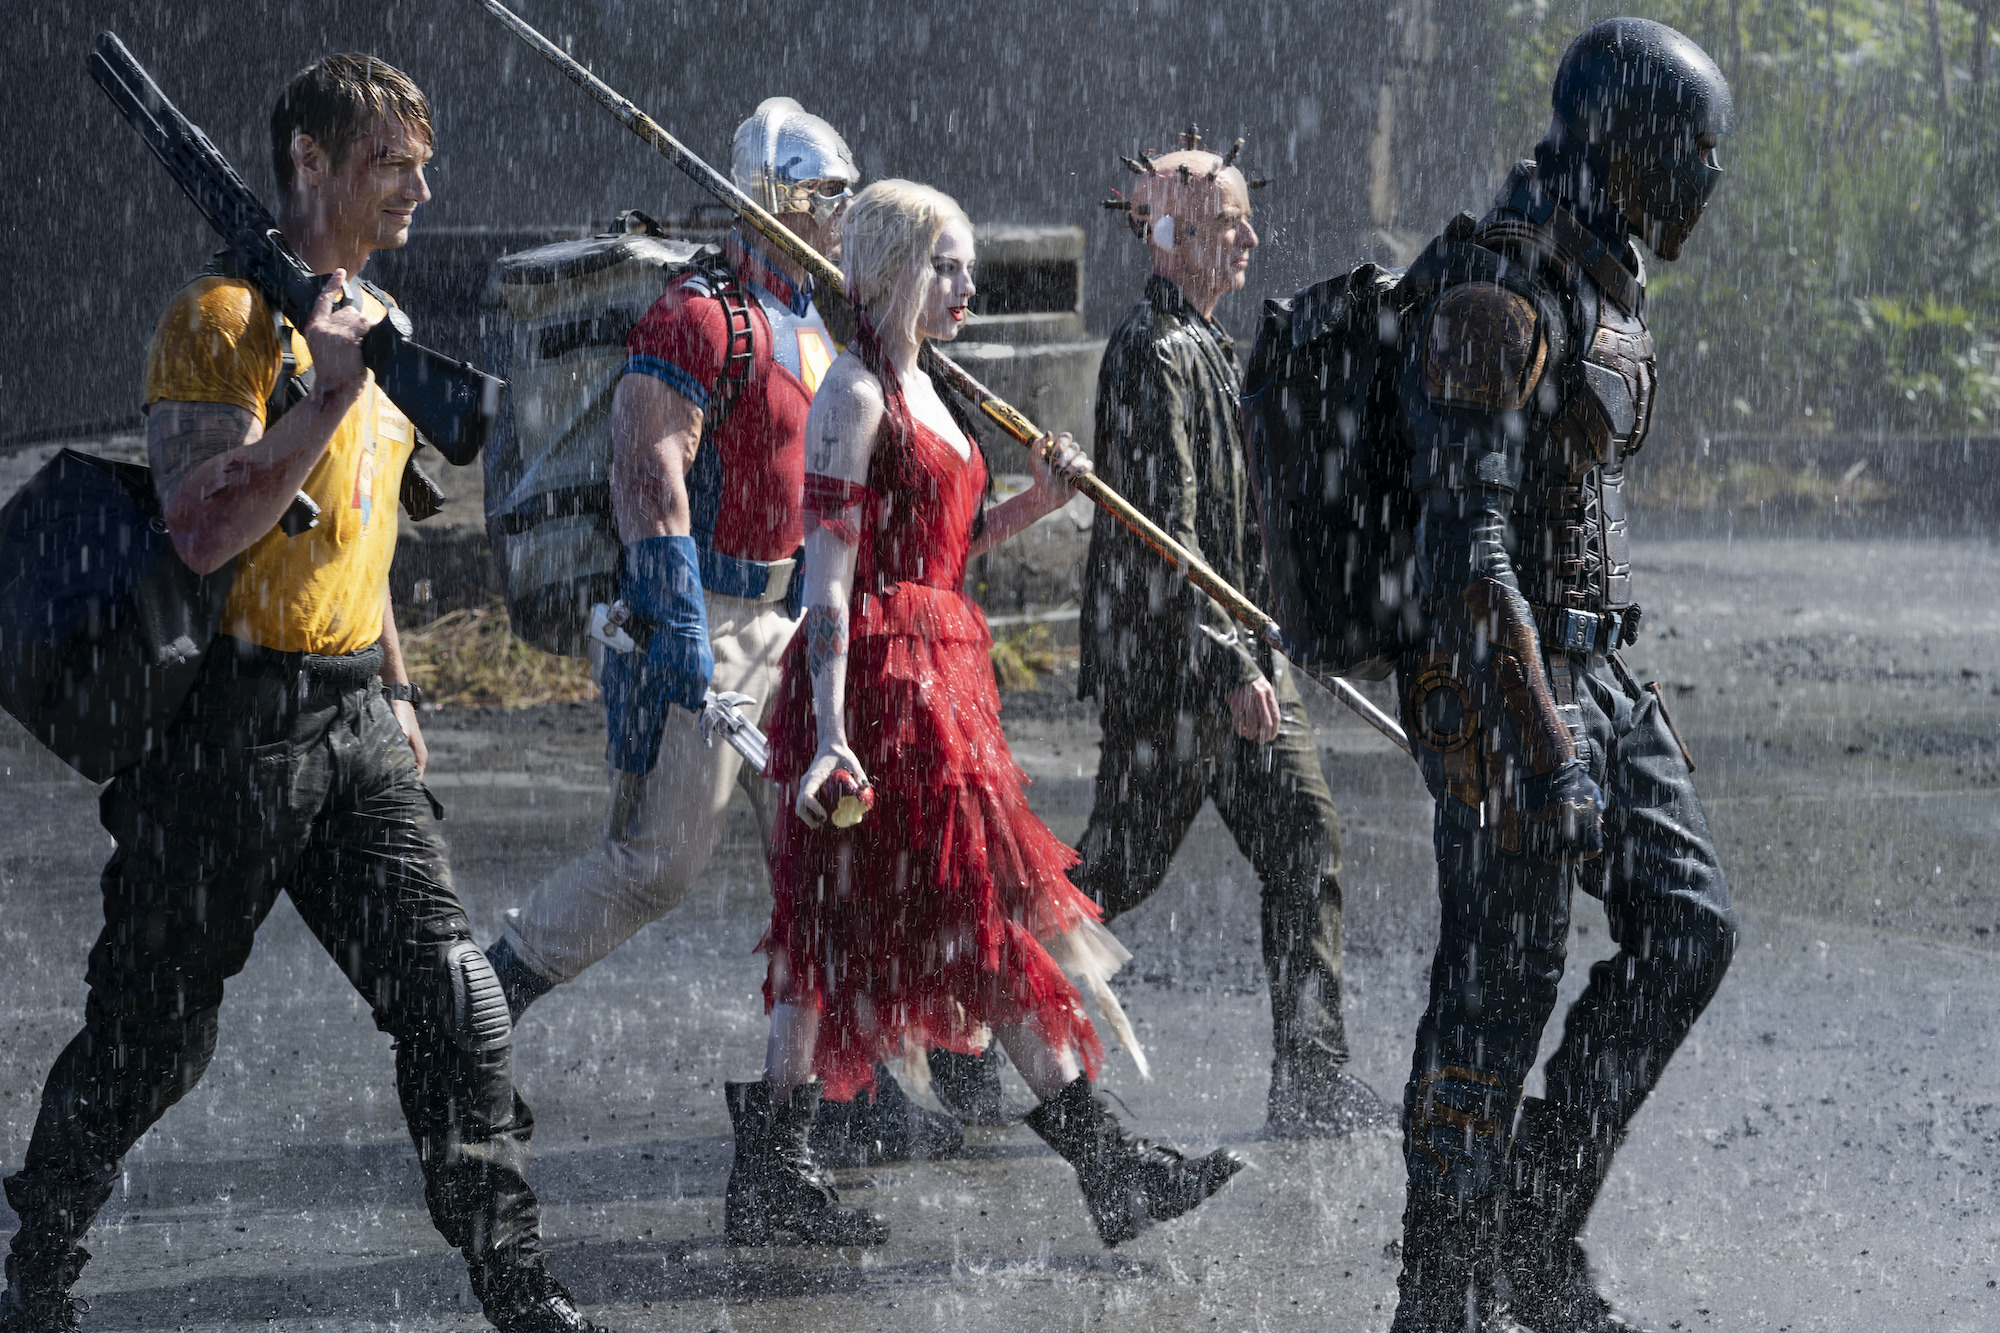 The Suicide Squad cast walks in the rain